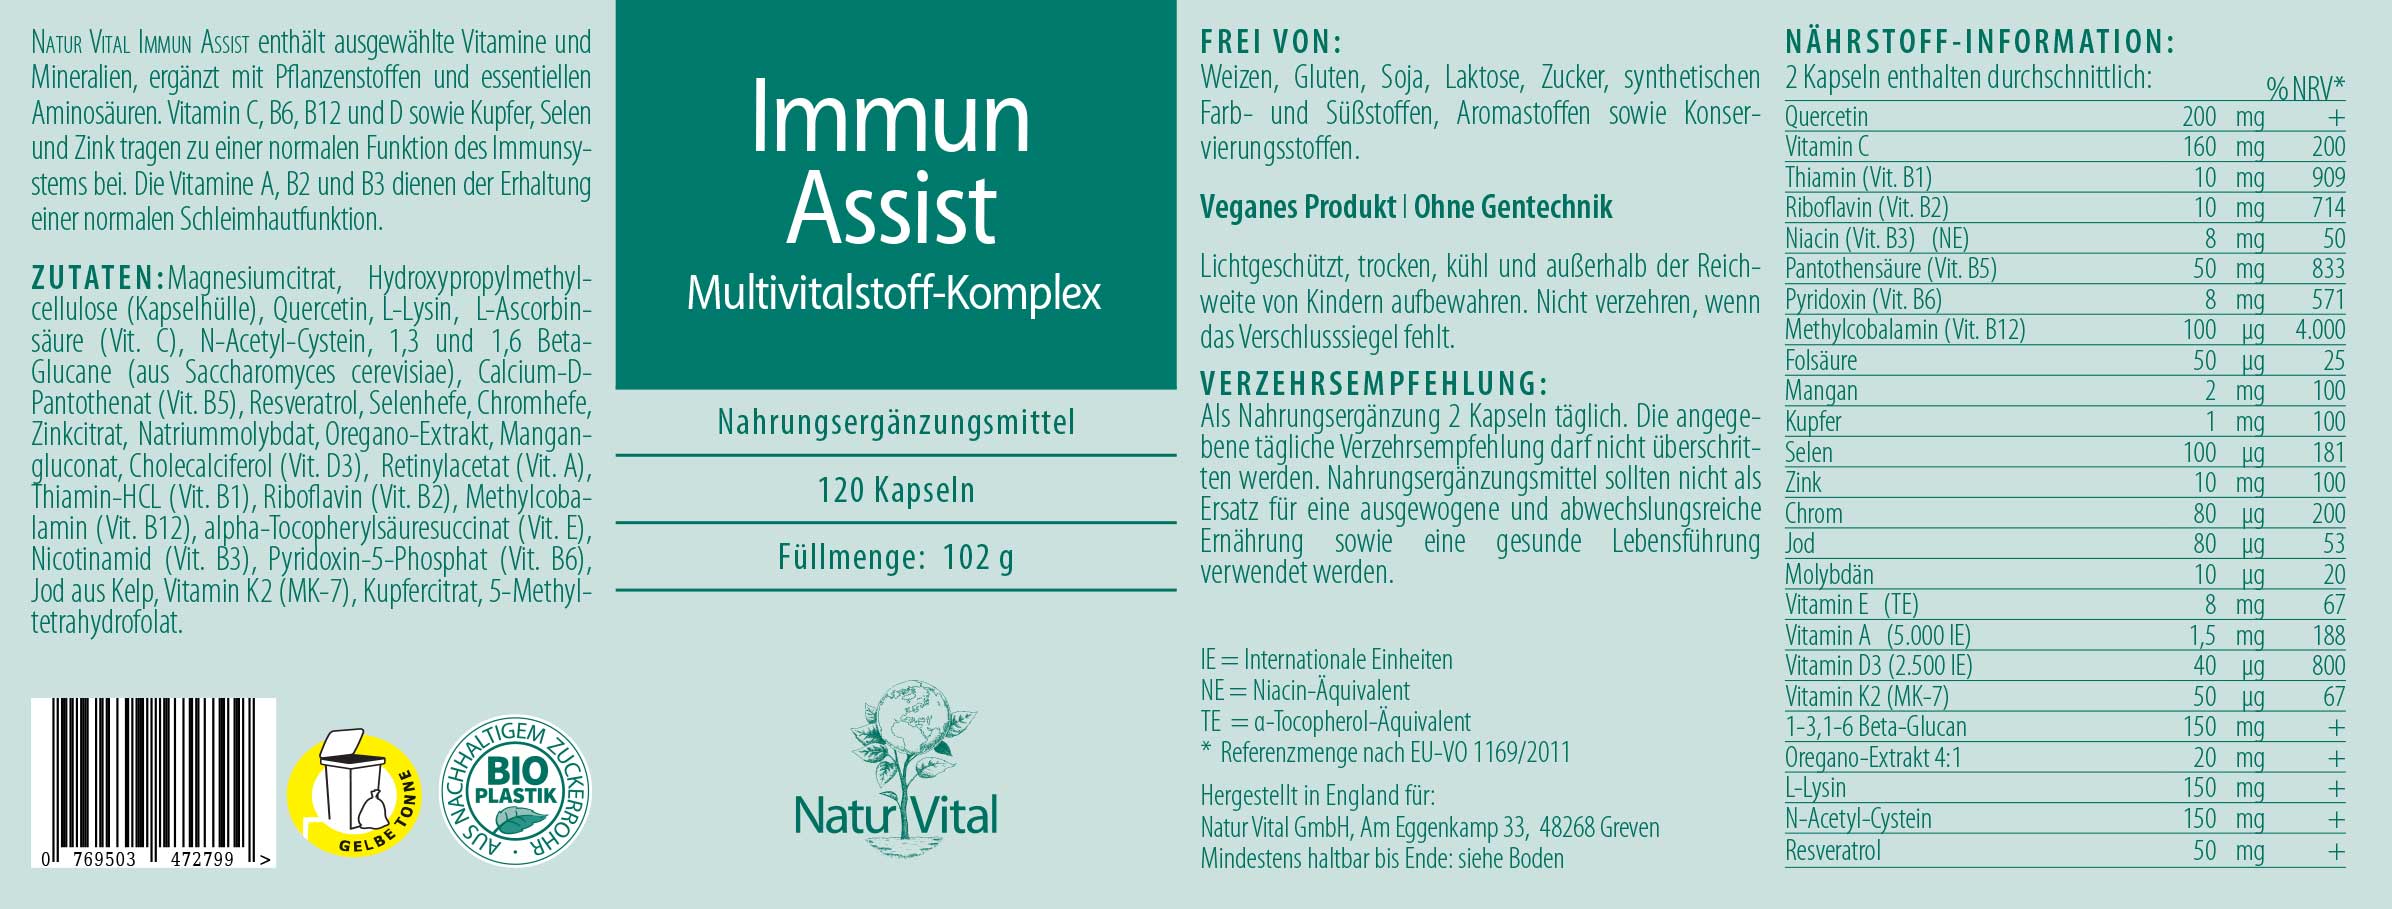 Immun Assist Etikett von Natur Vital